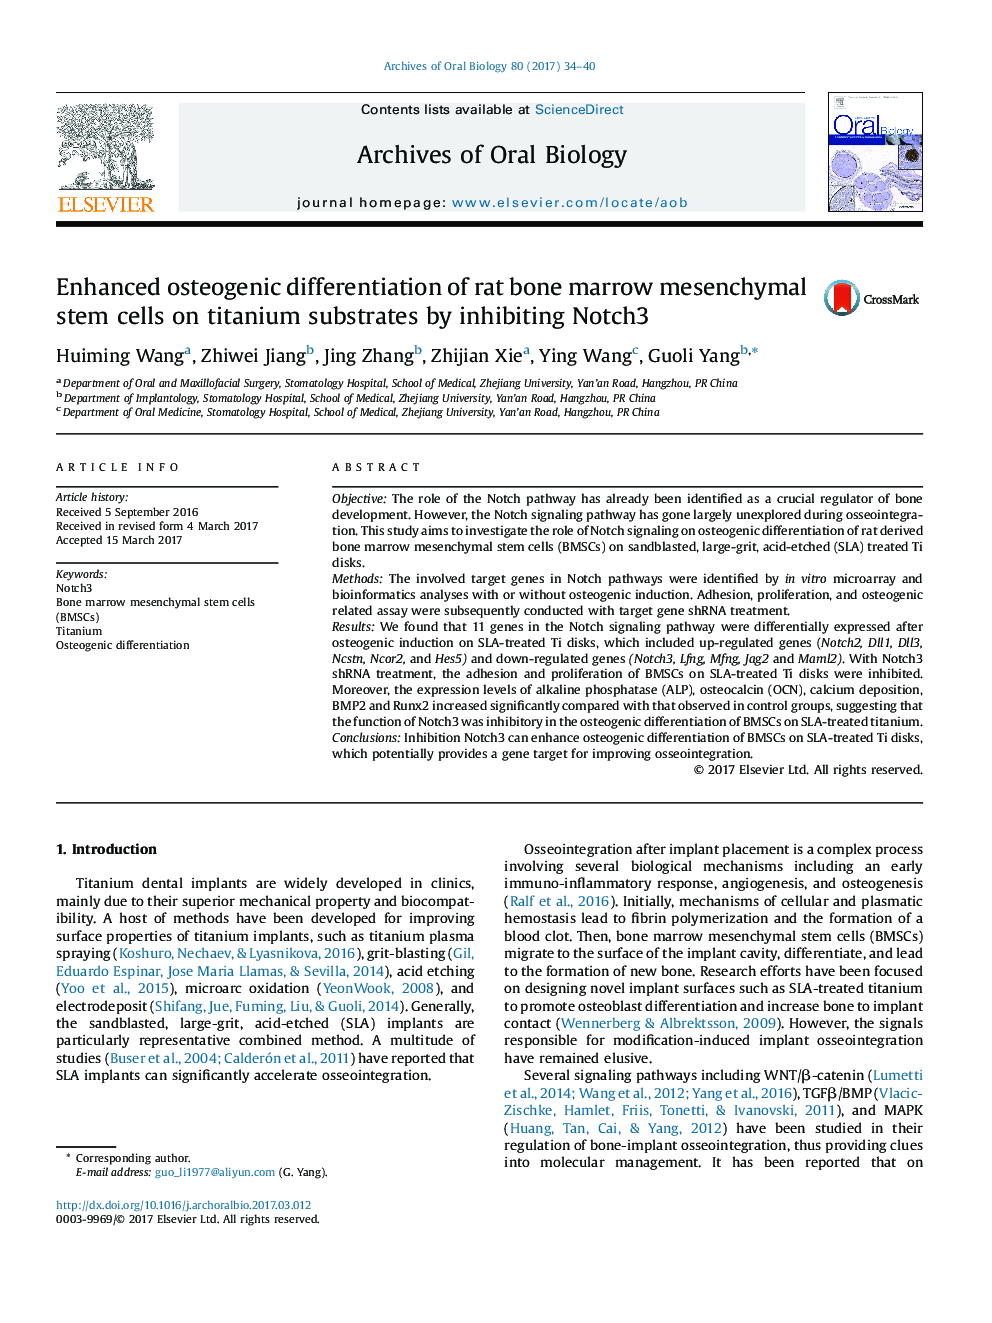 Enhanced osteogenic differentiation of rat bone marrow mesenchymal stem cells on titanium substrates by inhibiting Notch3